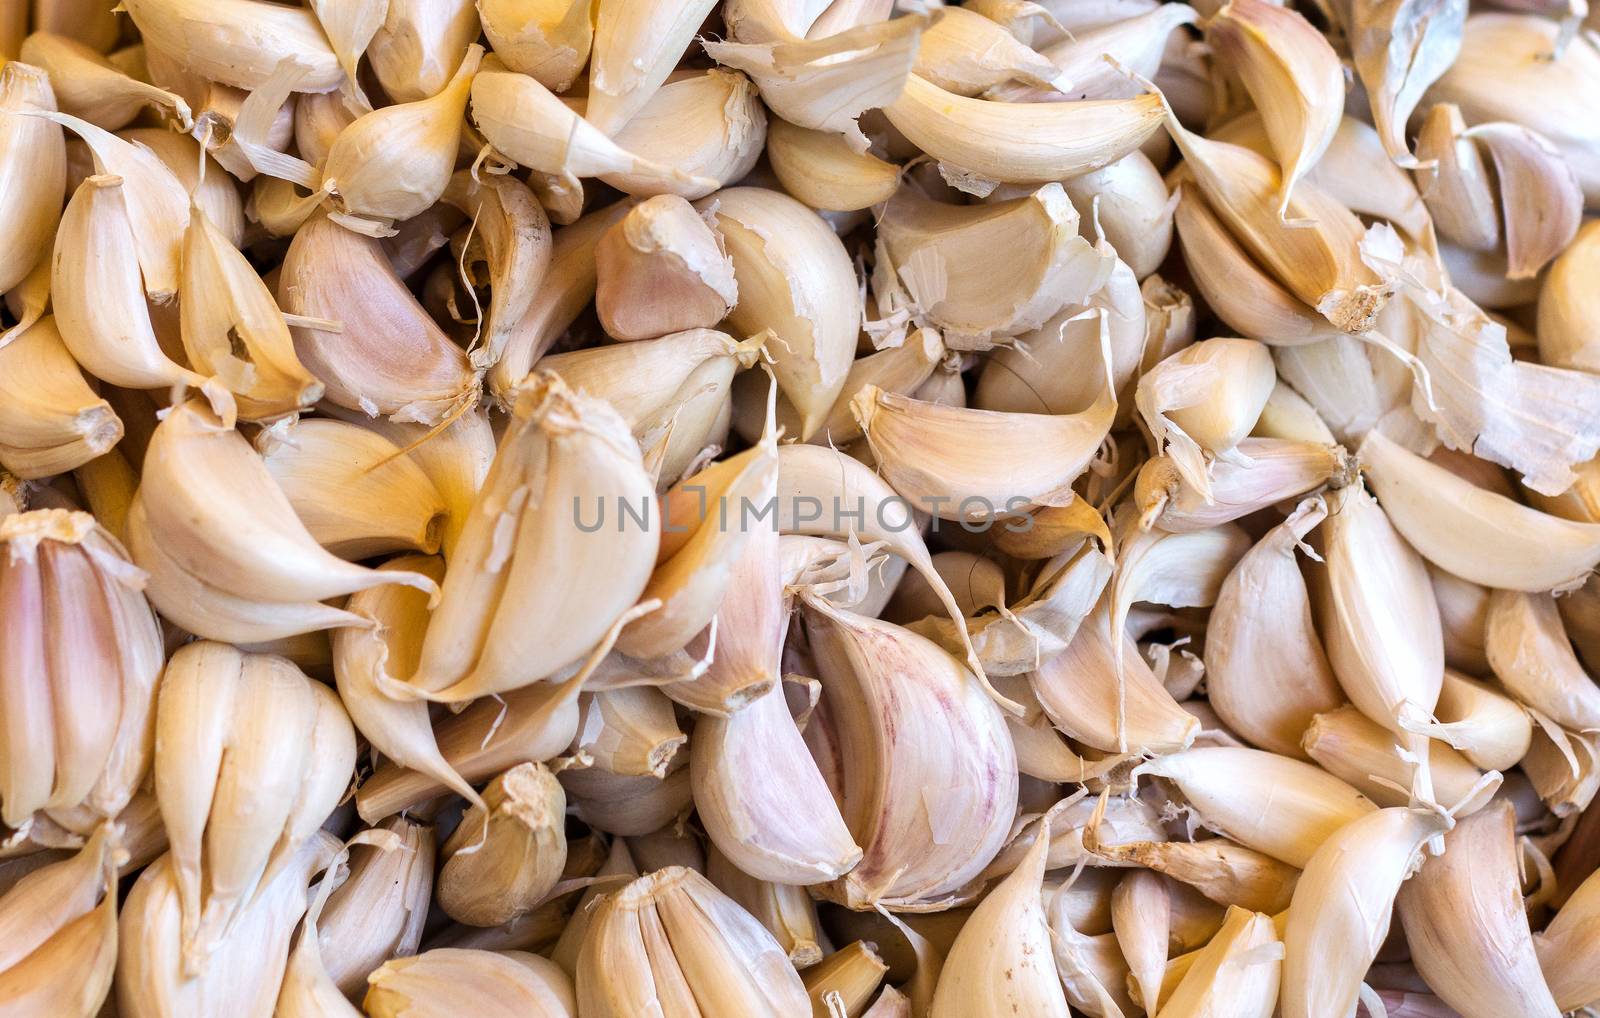 Heap of garlic cloves on display at the market in Thiruvannamali, Tamil Nadu, India.